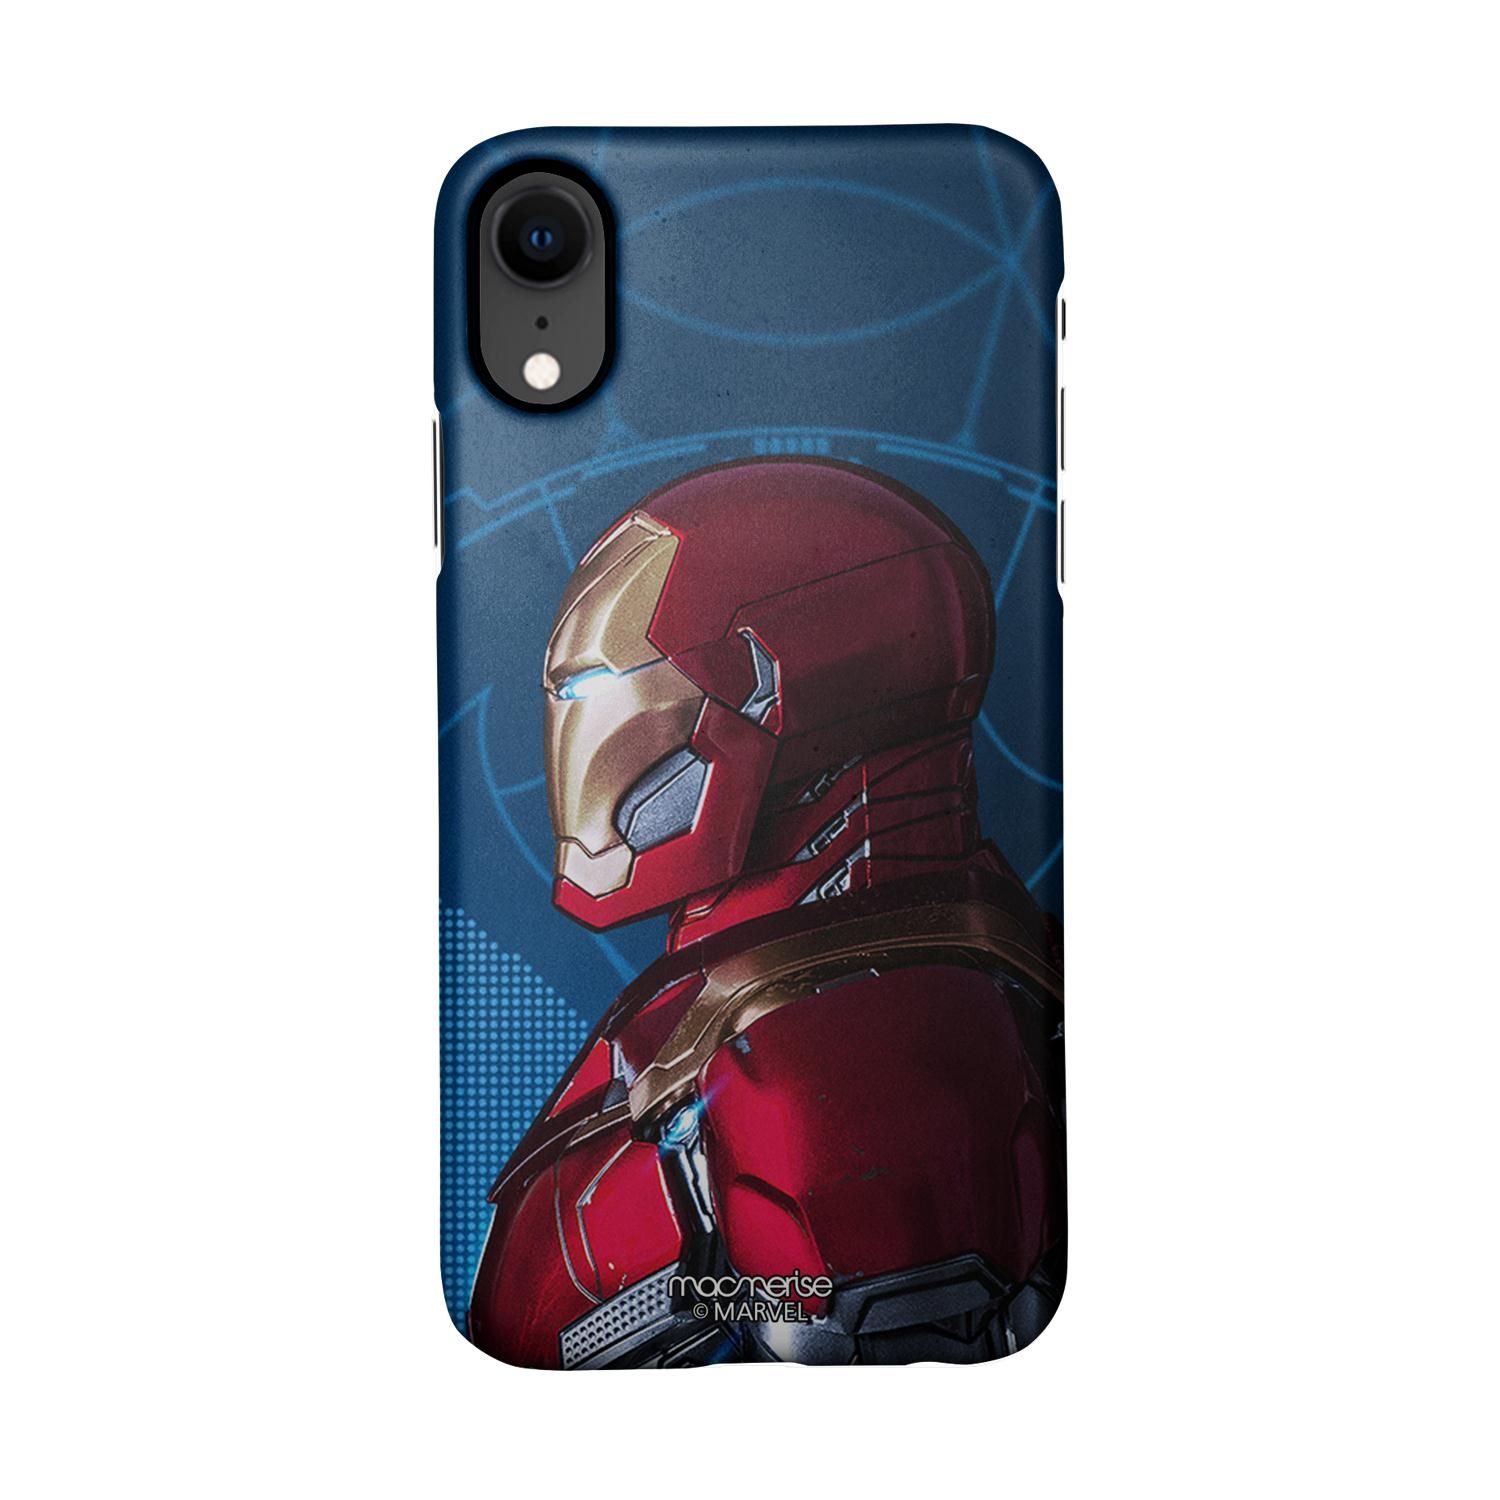 Buy Iron Man side Armor - Sleek Phone Case for iPhone XR Online